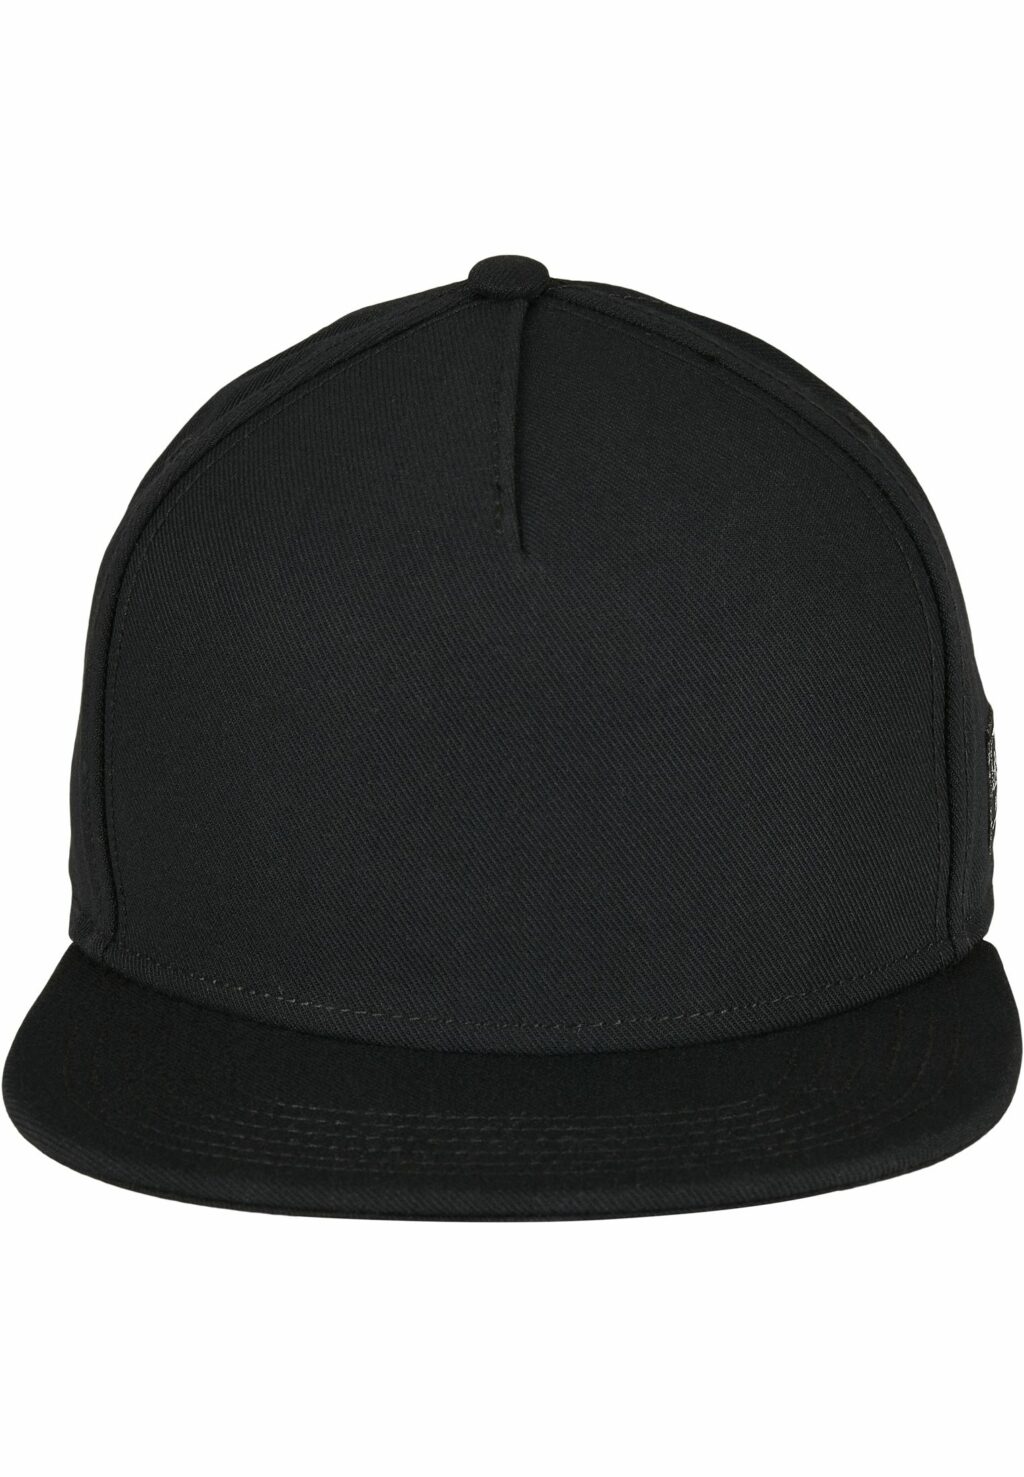 C&S Plain Snapback Cap black one CS005